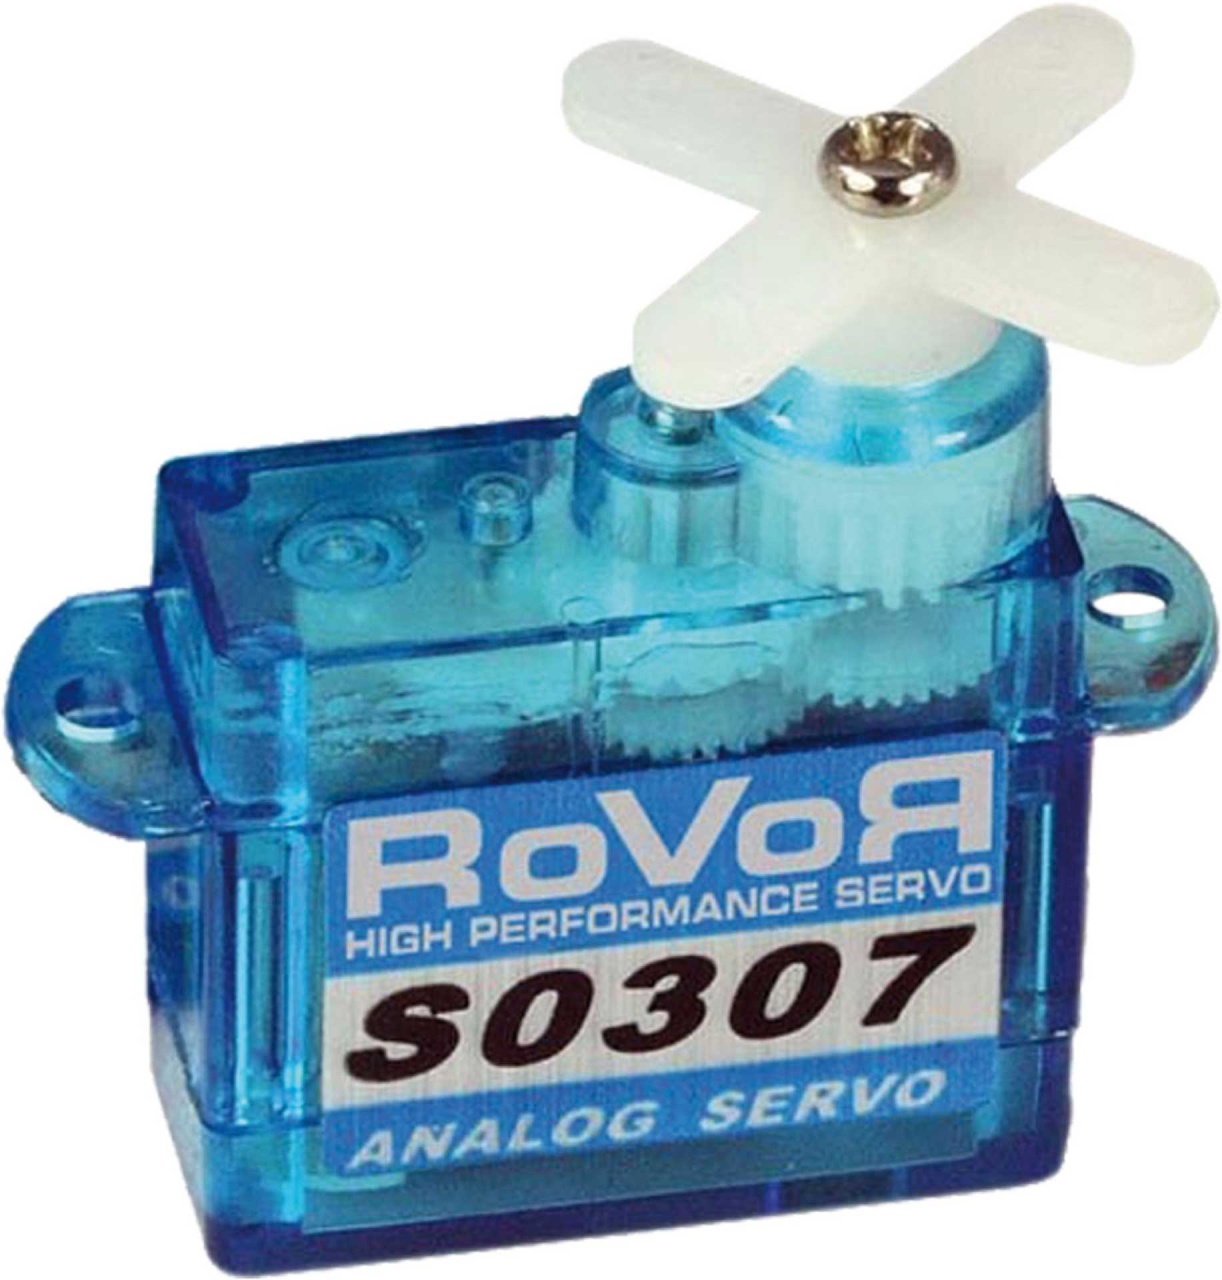 Robbe Modellsport ROVOR SERVO S0307 3.7G